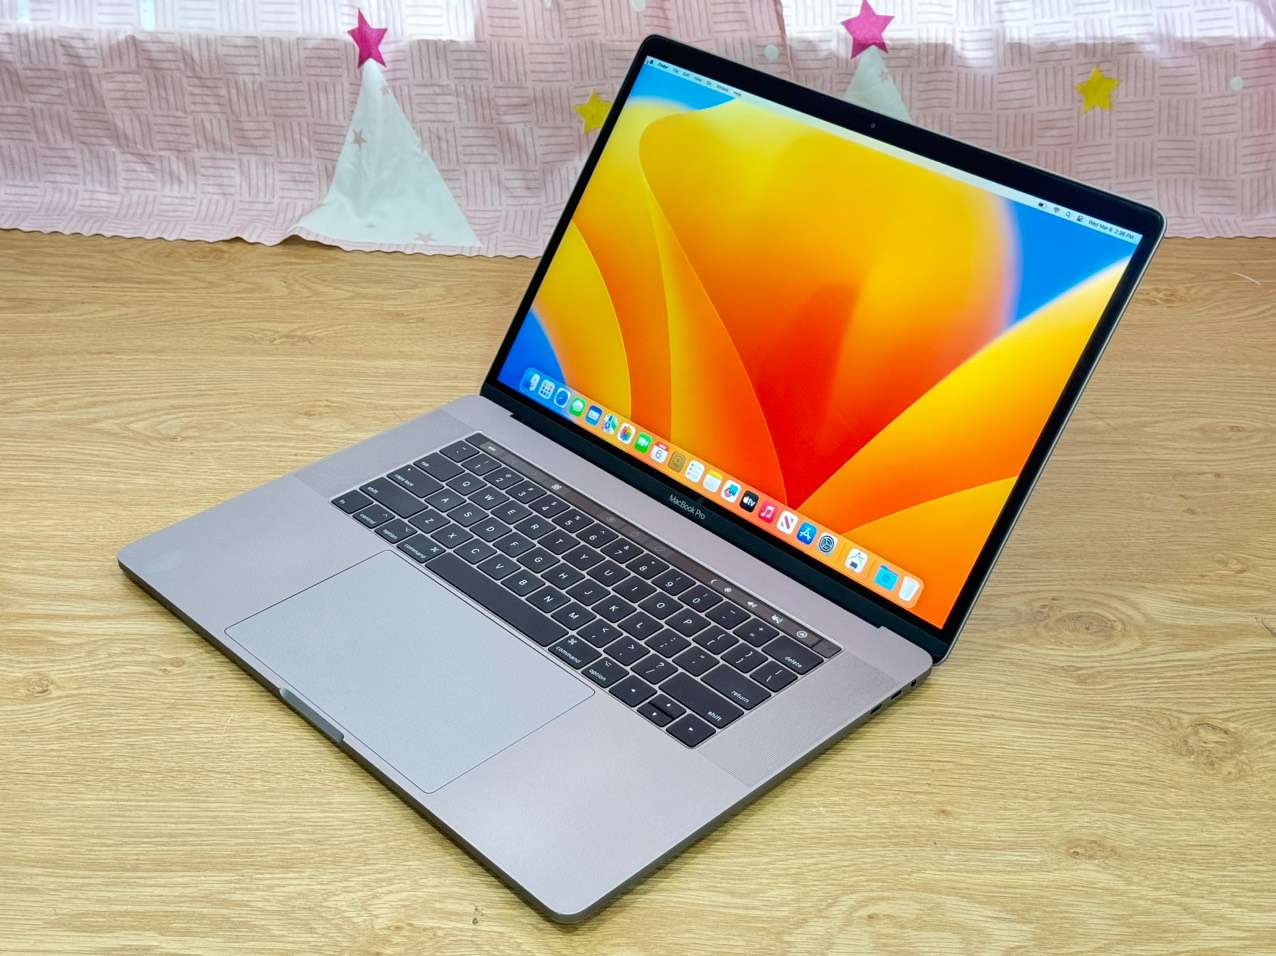 Macbook-pro-15-inch-2017-core-i7-ram-16gb-ssd-500gb-vga-like-new-6